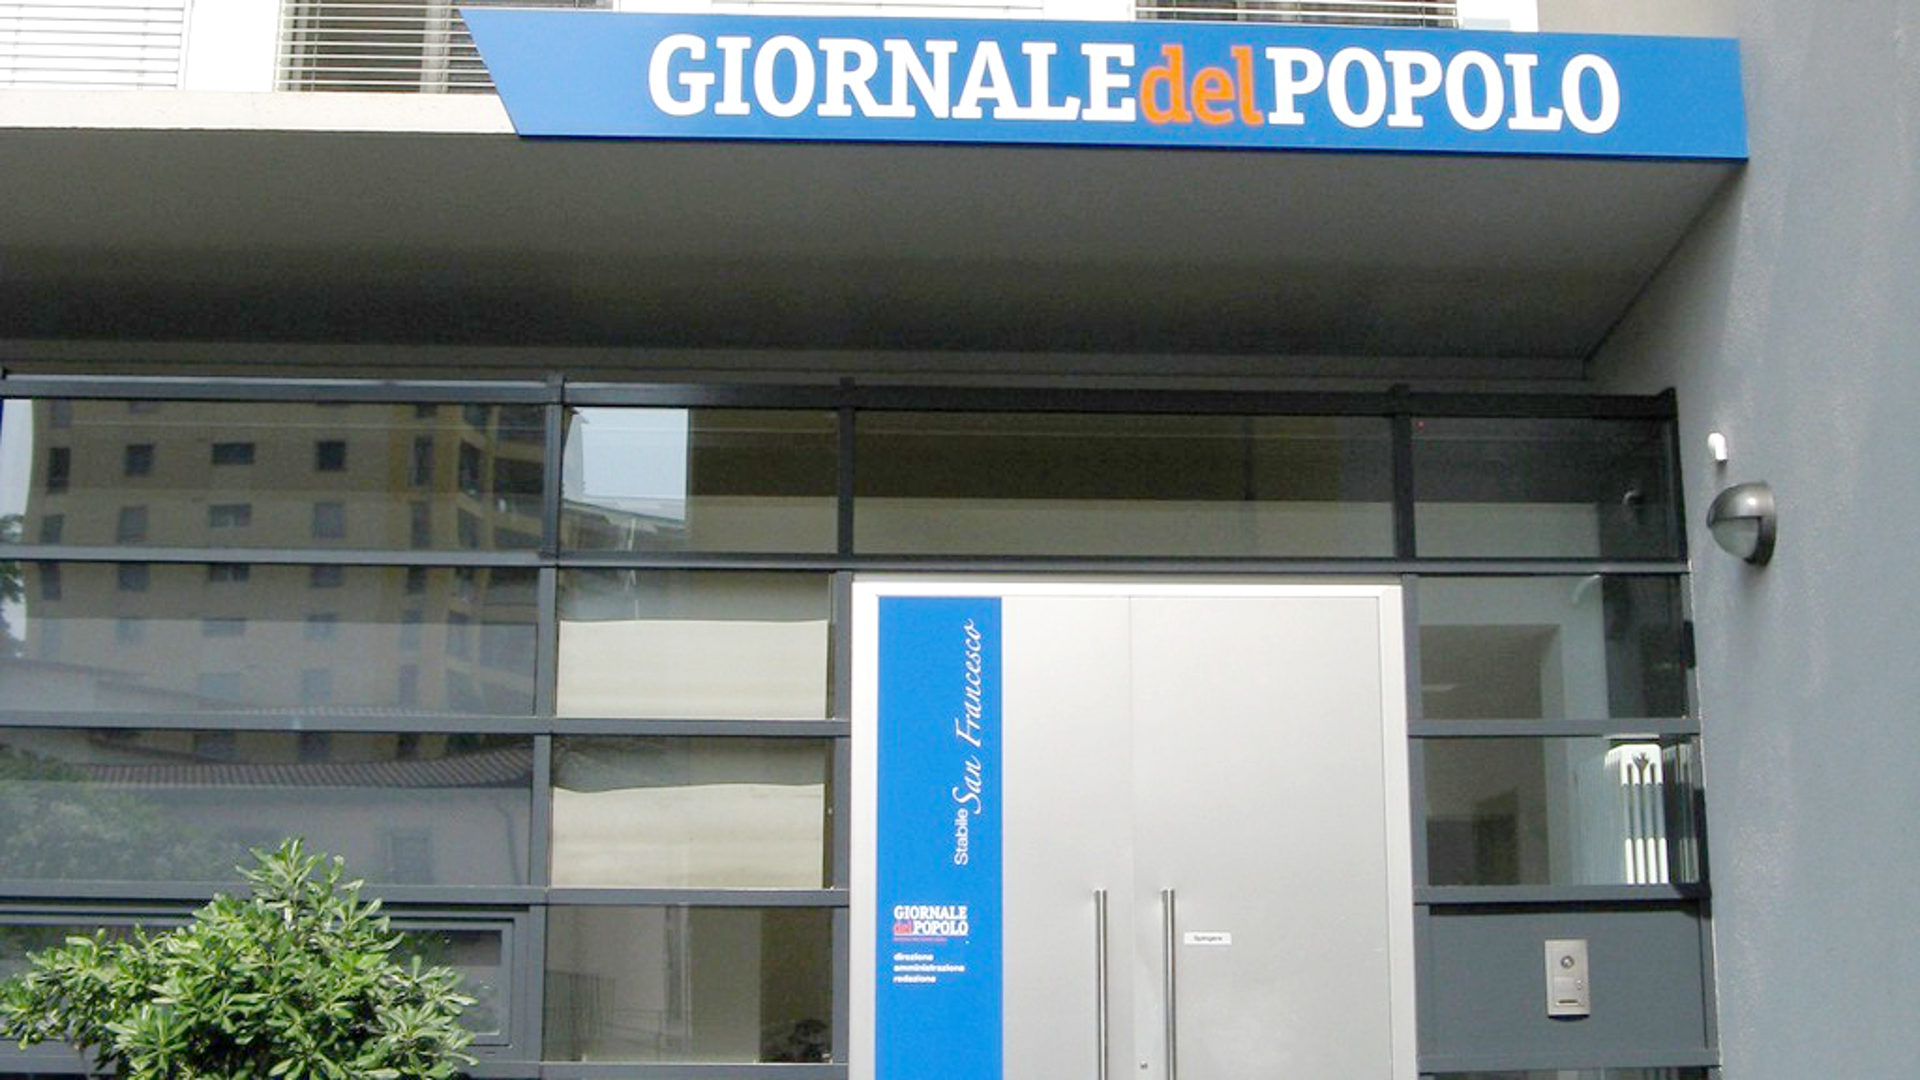 Eingang des Giornale del Popolo